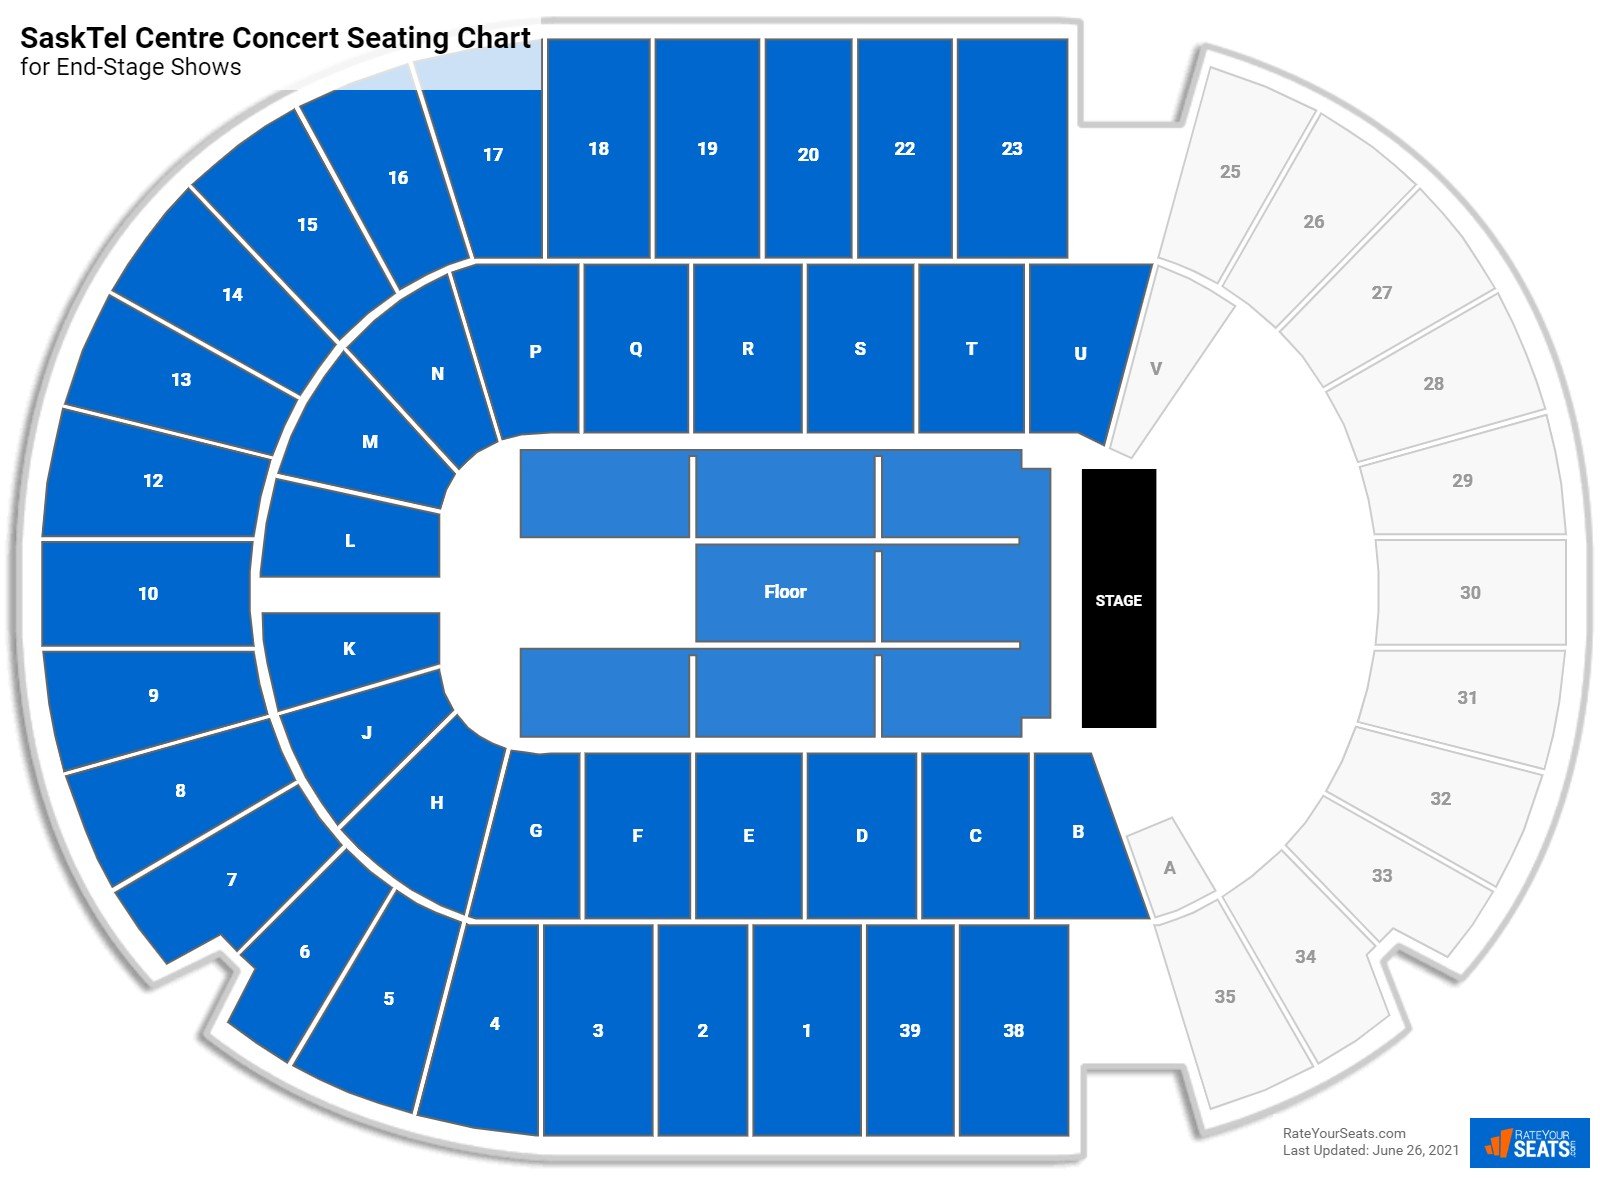 SaskTel Centre Concert Seating Chart